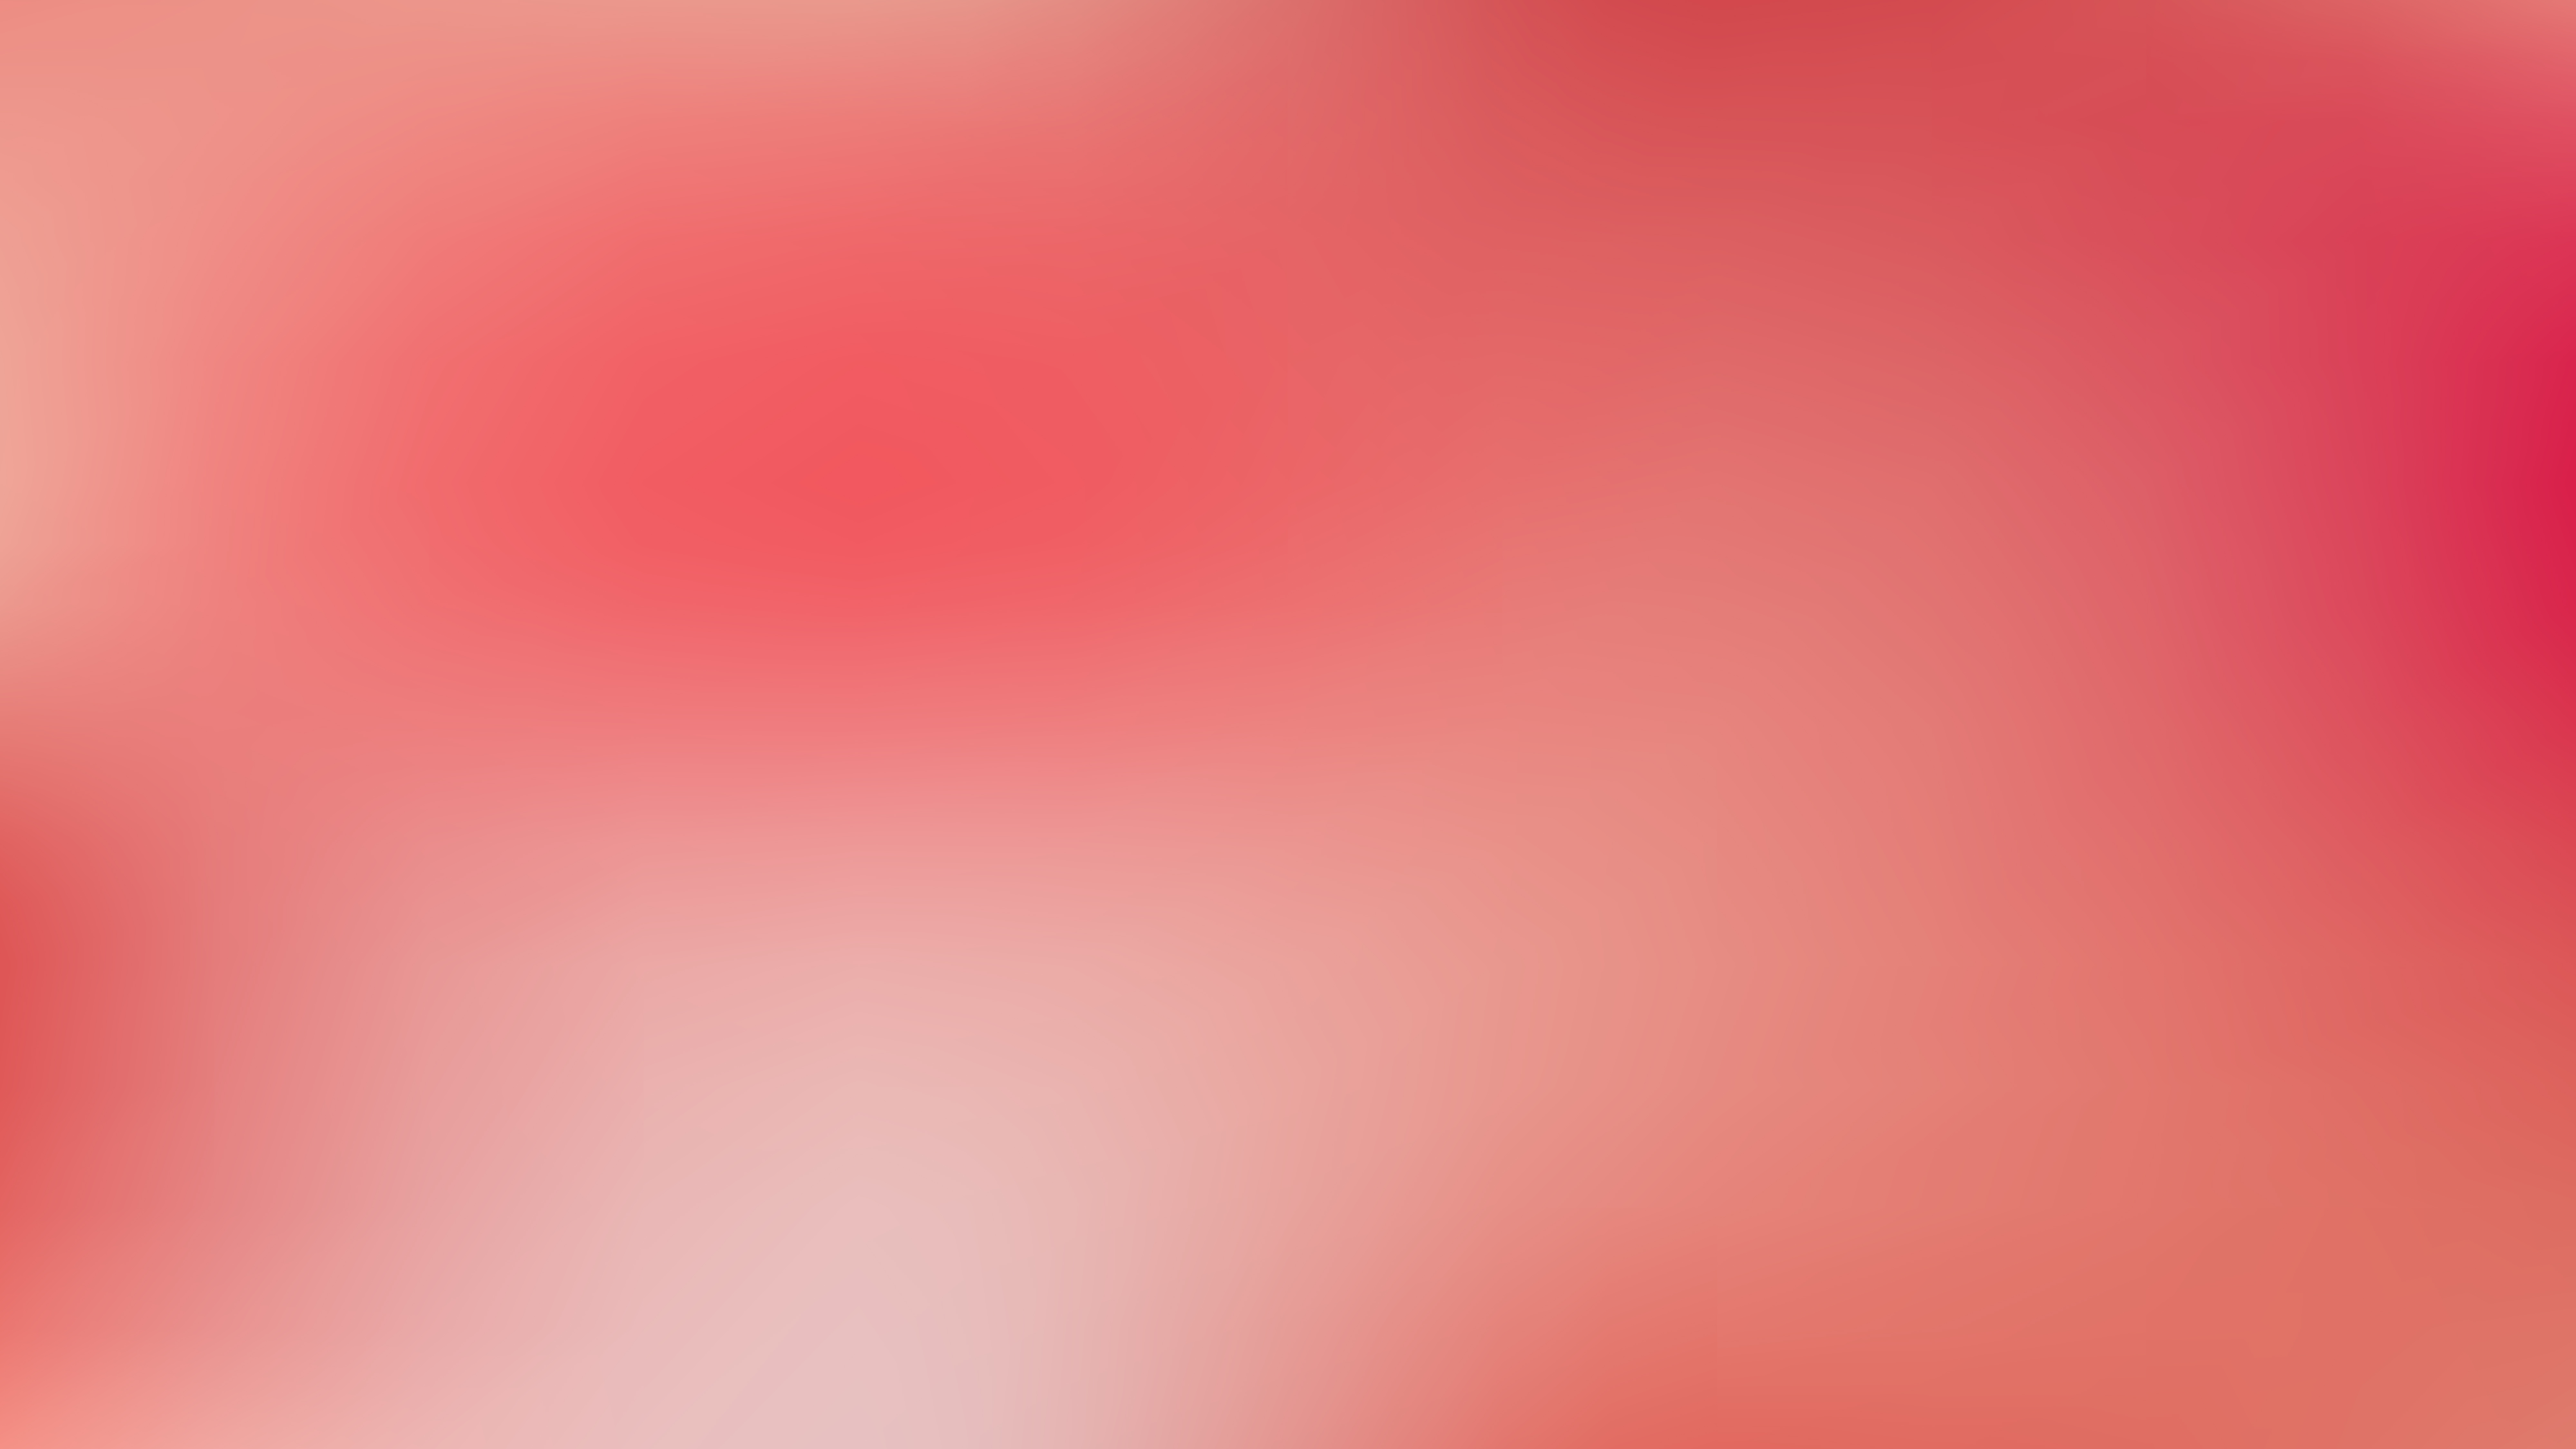 Free Light Red Blur Background Design